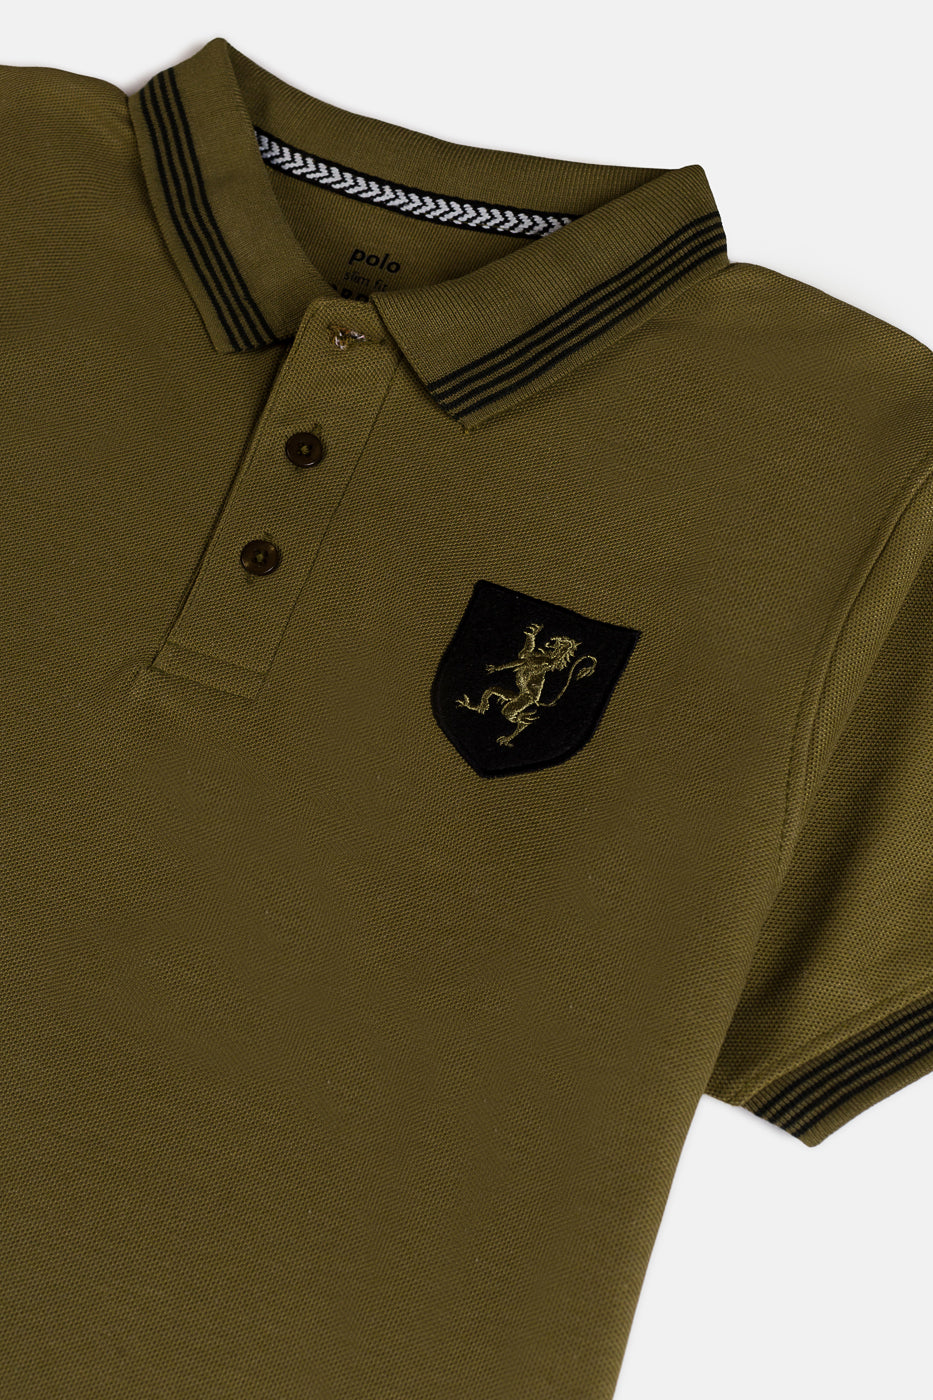 GRDNO Premium Imported Polo Shirt - Army Green